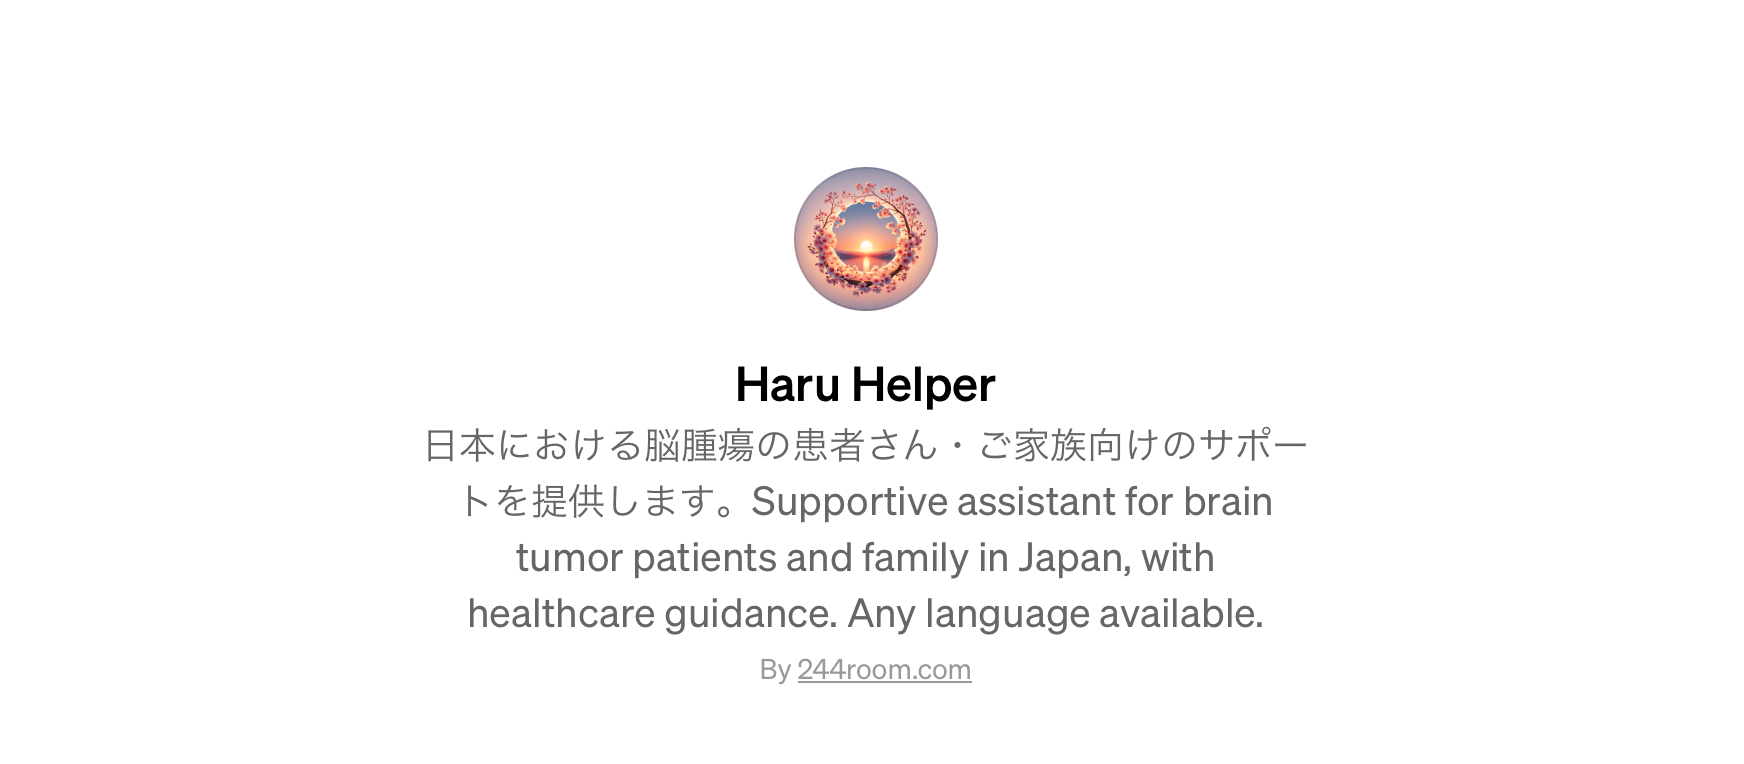 Haru Helper top image